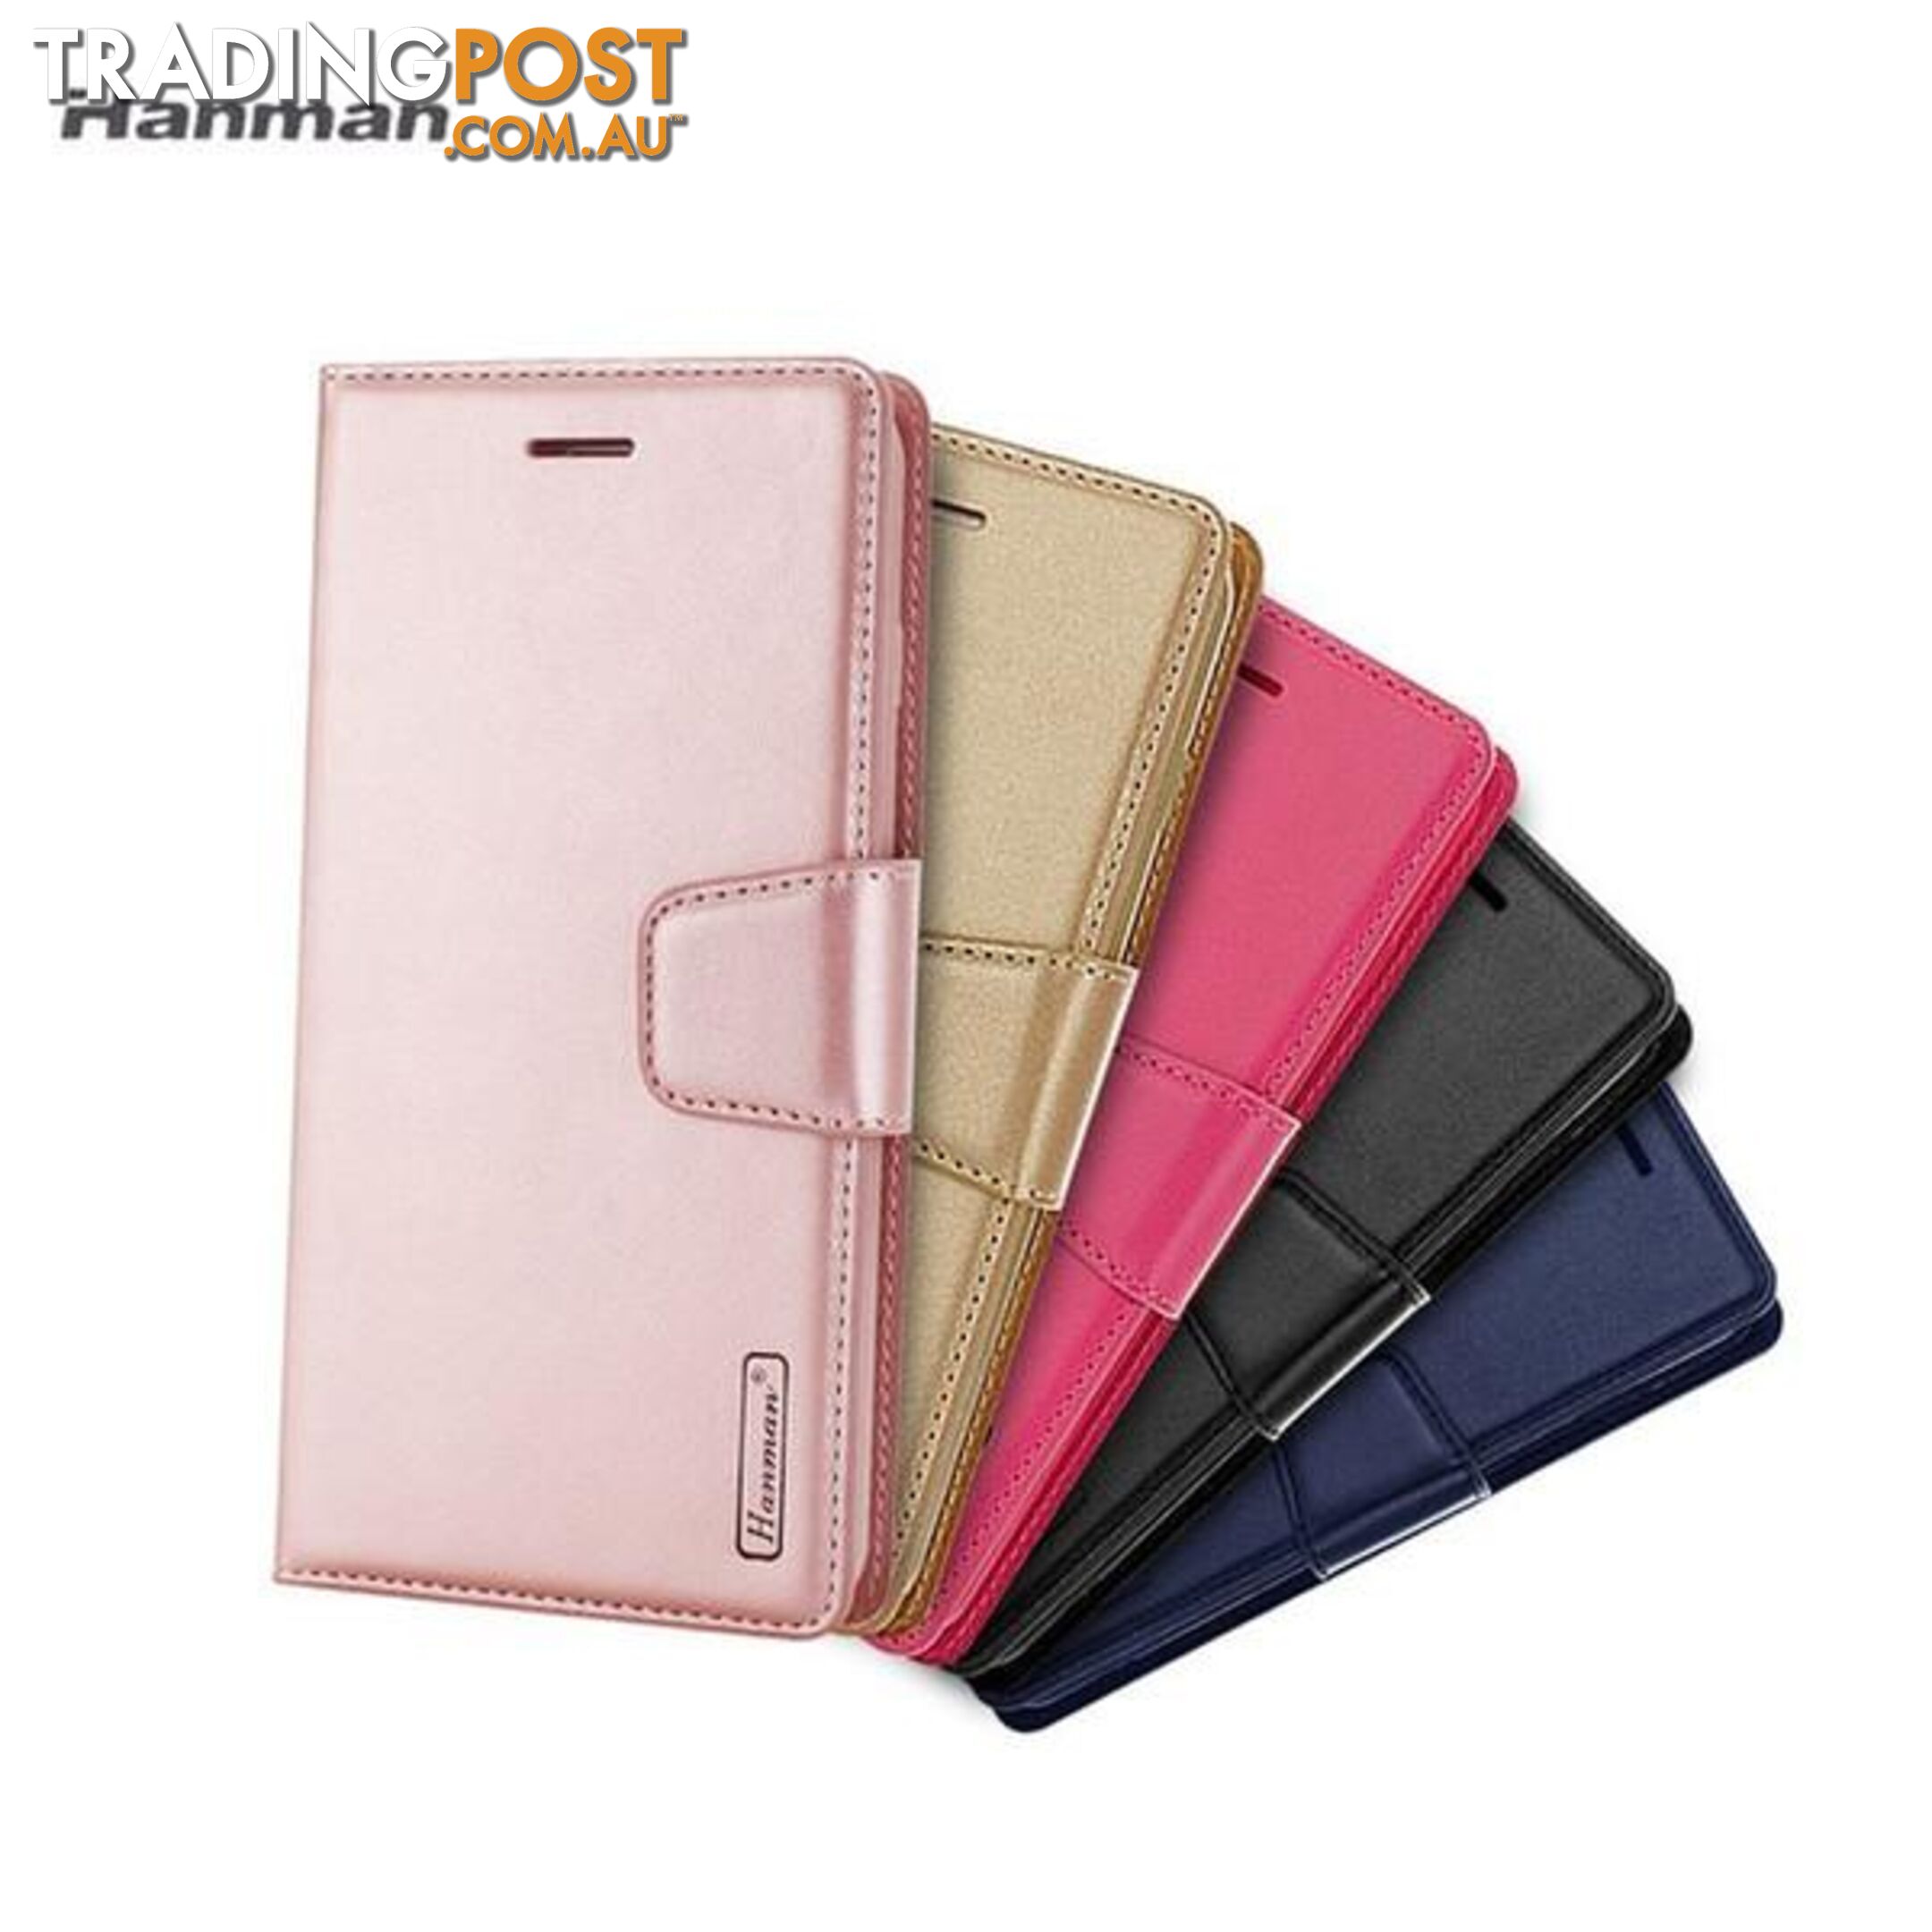 S10 Hanman Wallet Style Case - 100997 - Cases